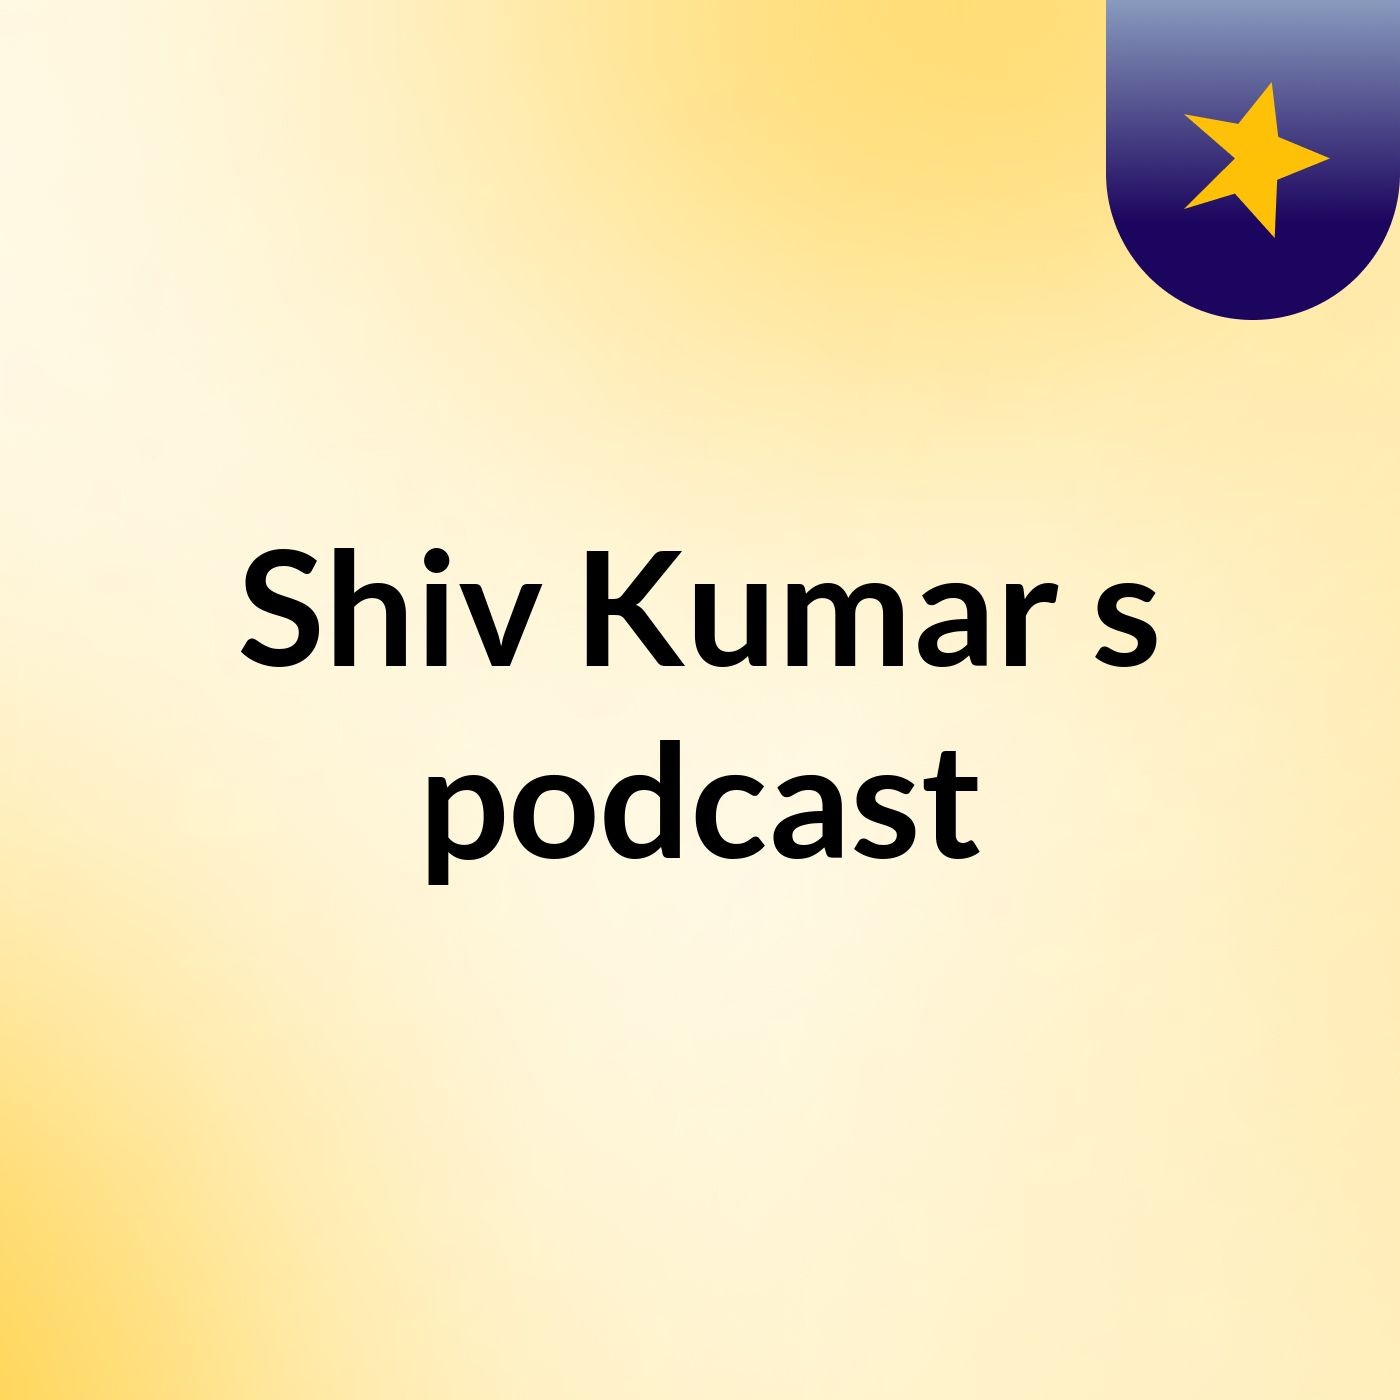 Shiv Kumar's podcast